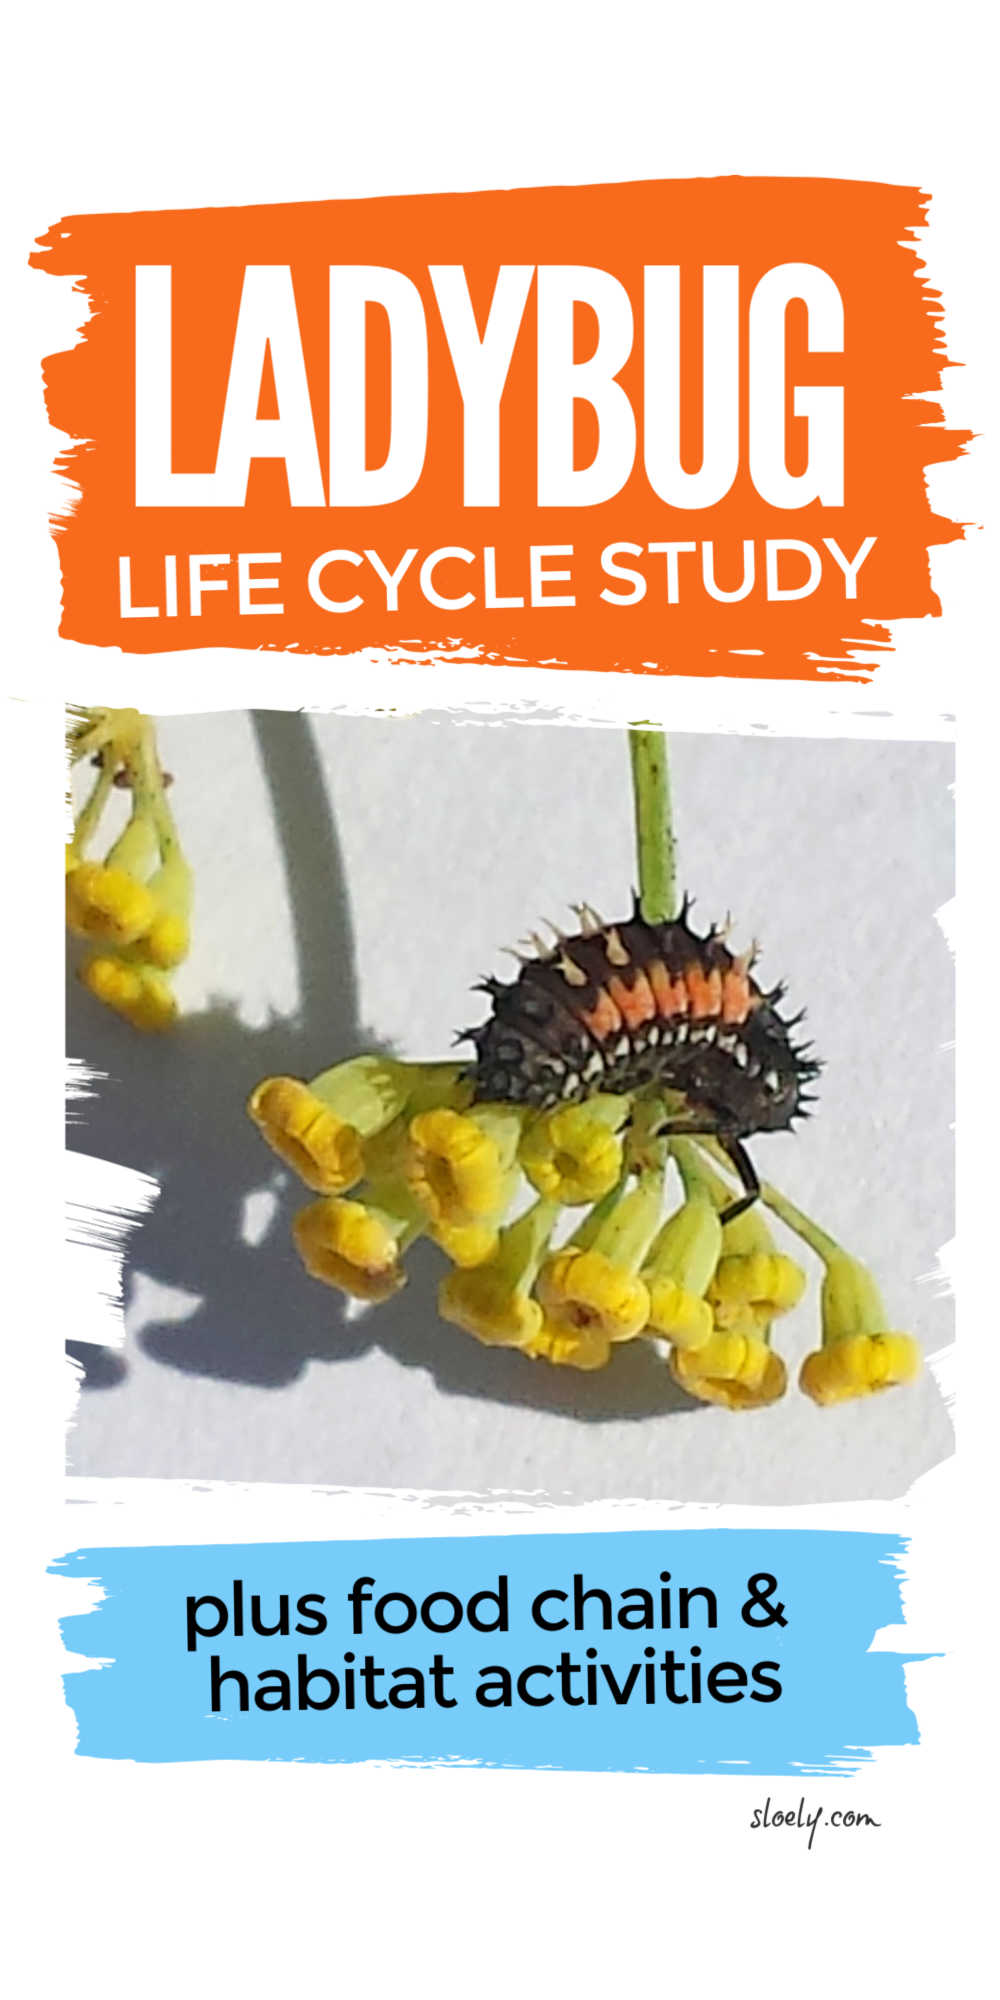 Ladybug Life Cycle, Food Chain and Habitats